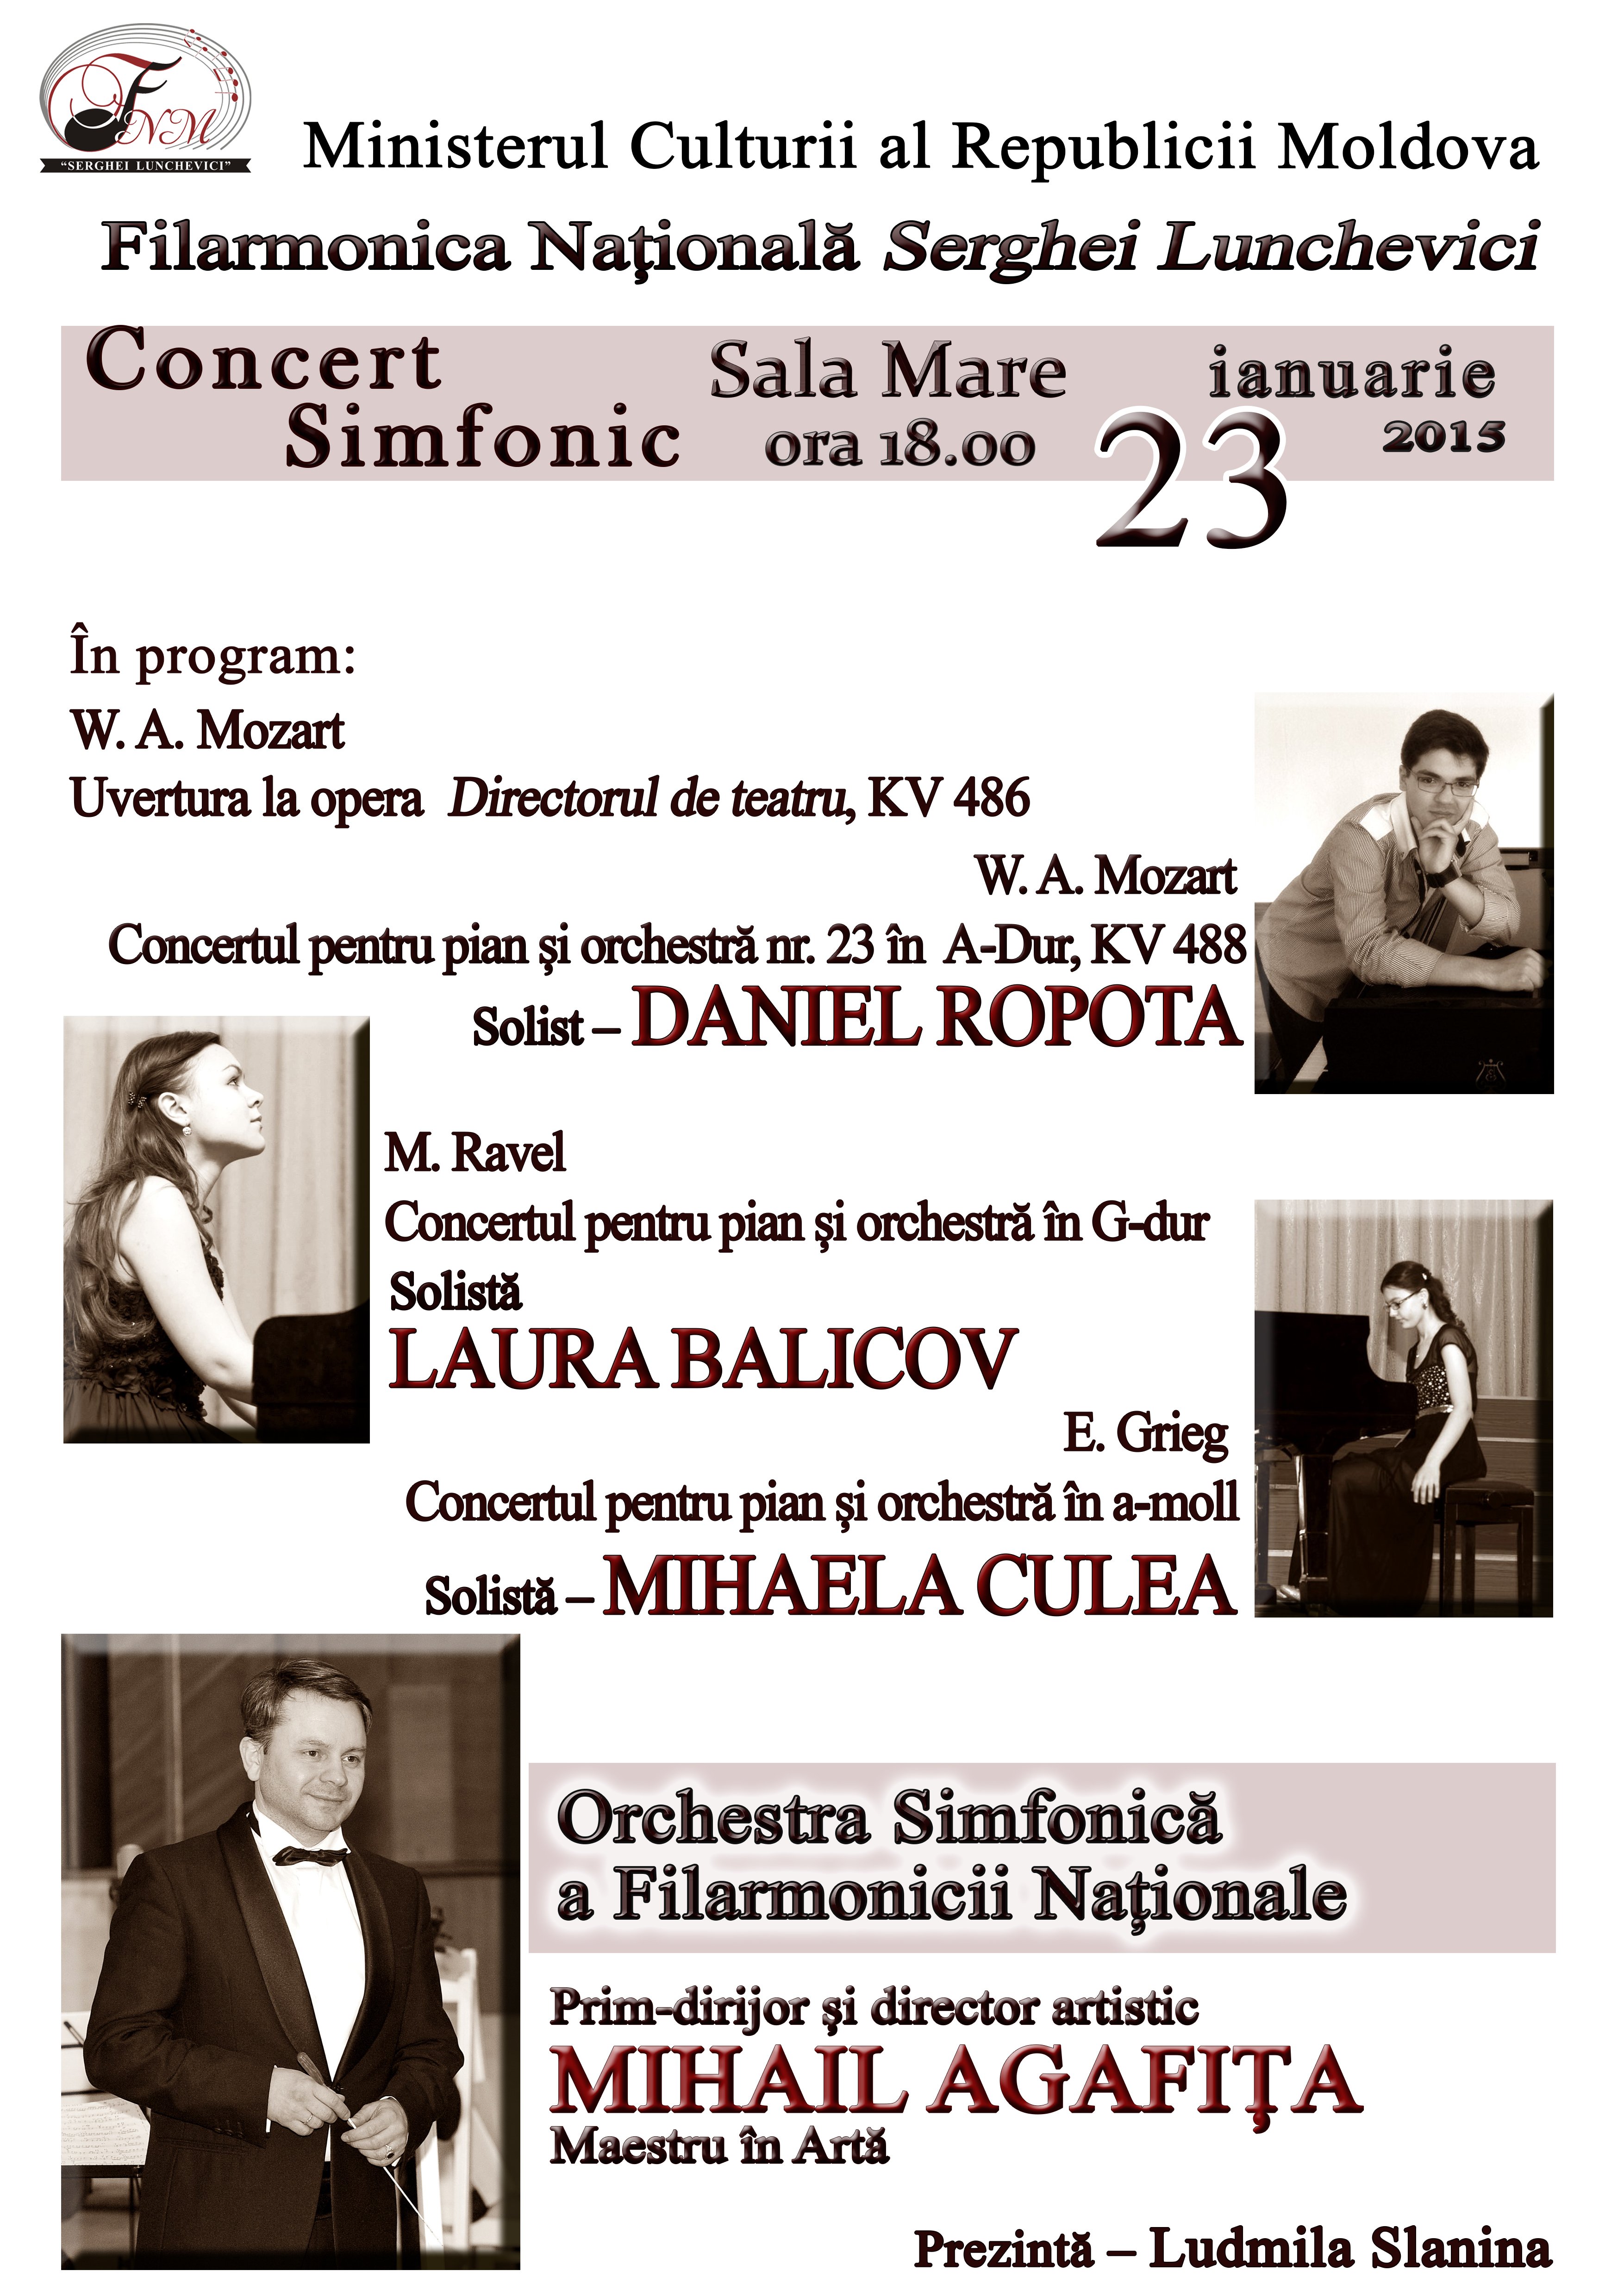 Concert Simfonic ianuarie